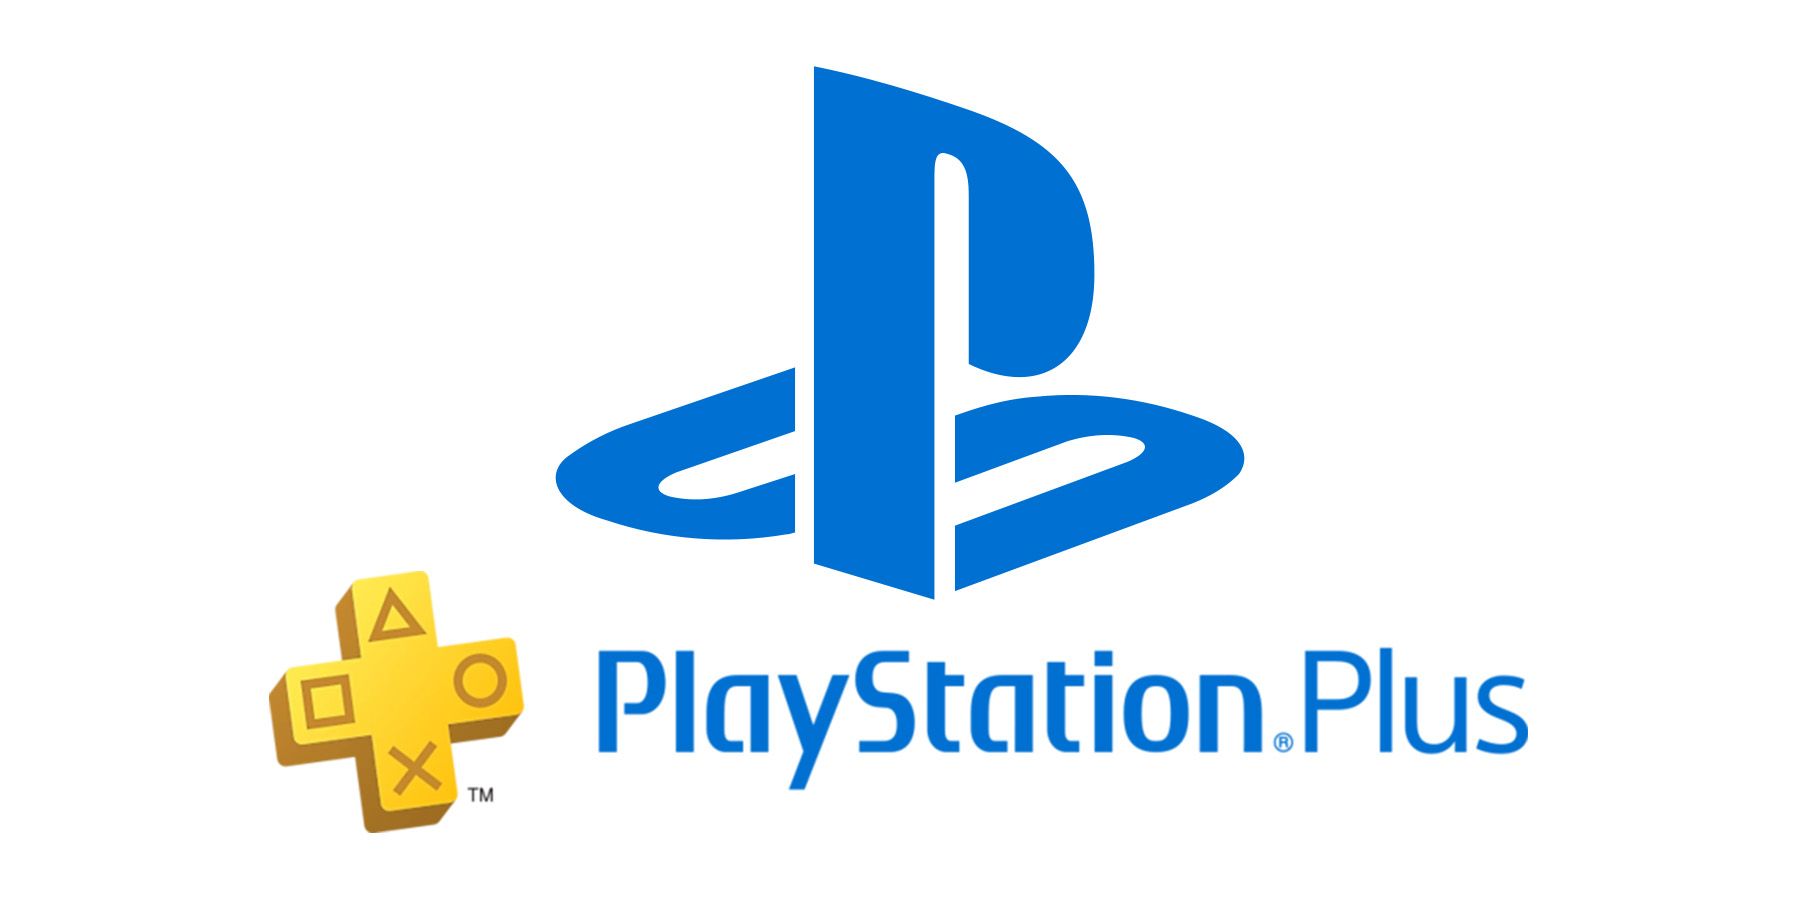 PS Plus blue logo below PS emblem submark on white background